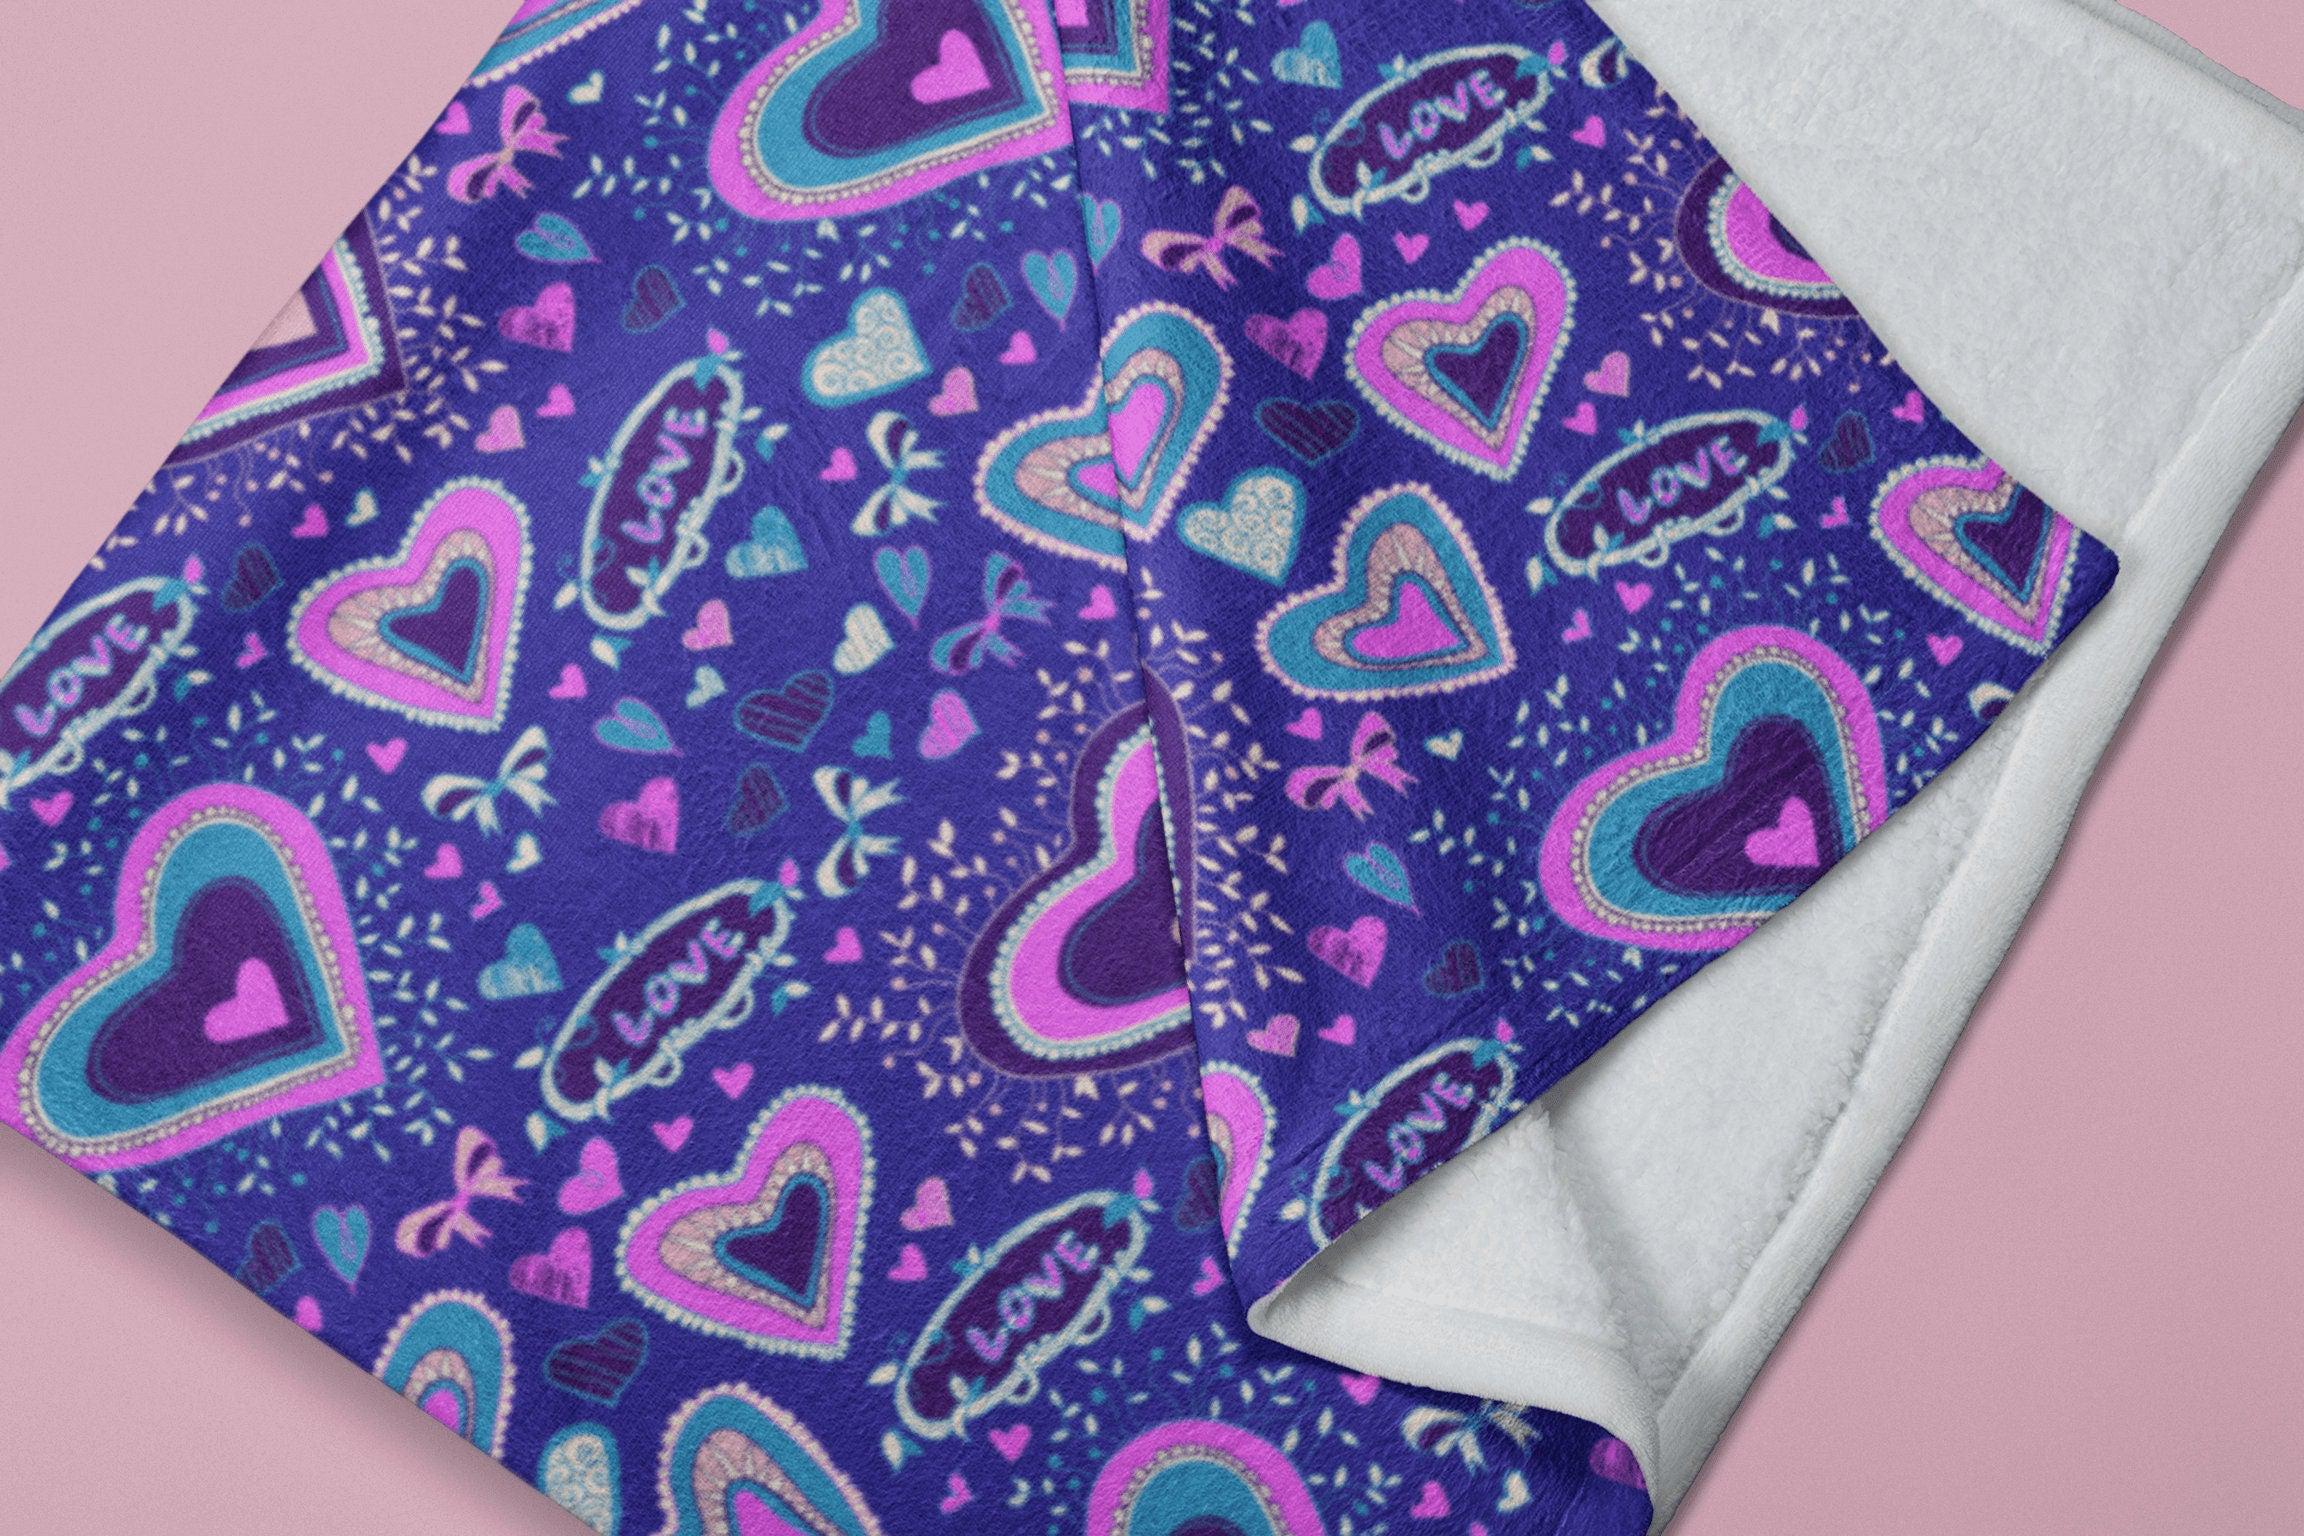 daintyduvet Cute Hearts Pattern Pink Purple Soft Fluffy Velvet Flannel Fleece Throw Blanket